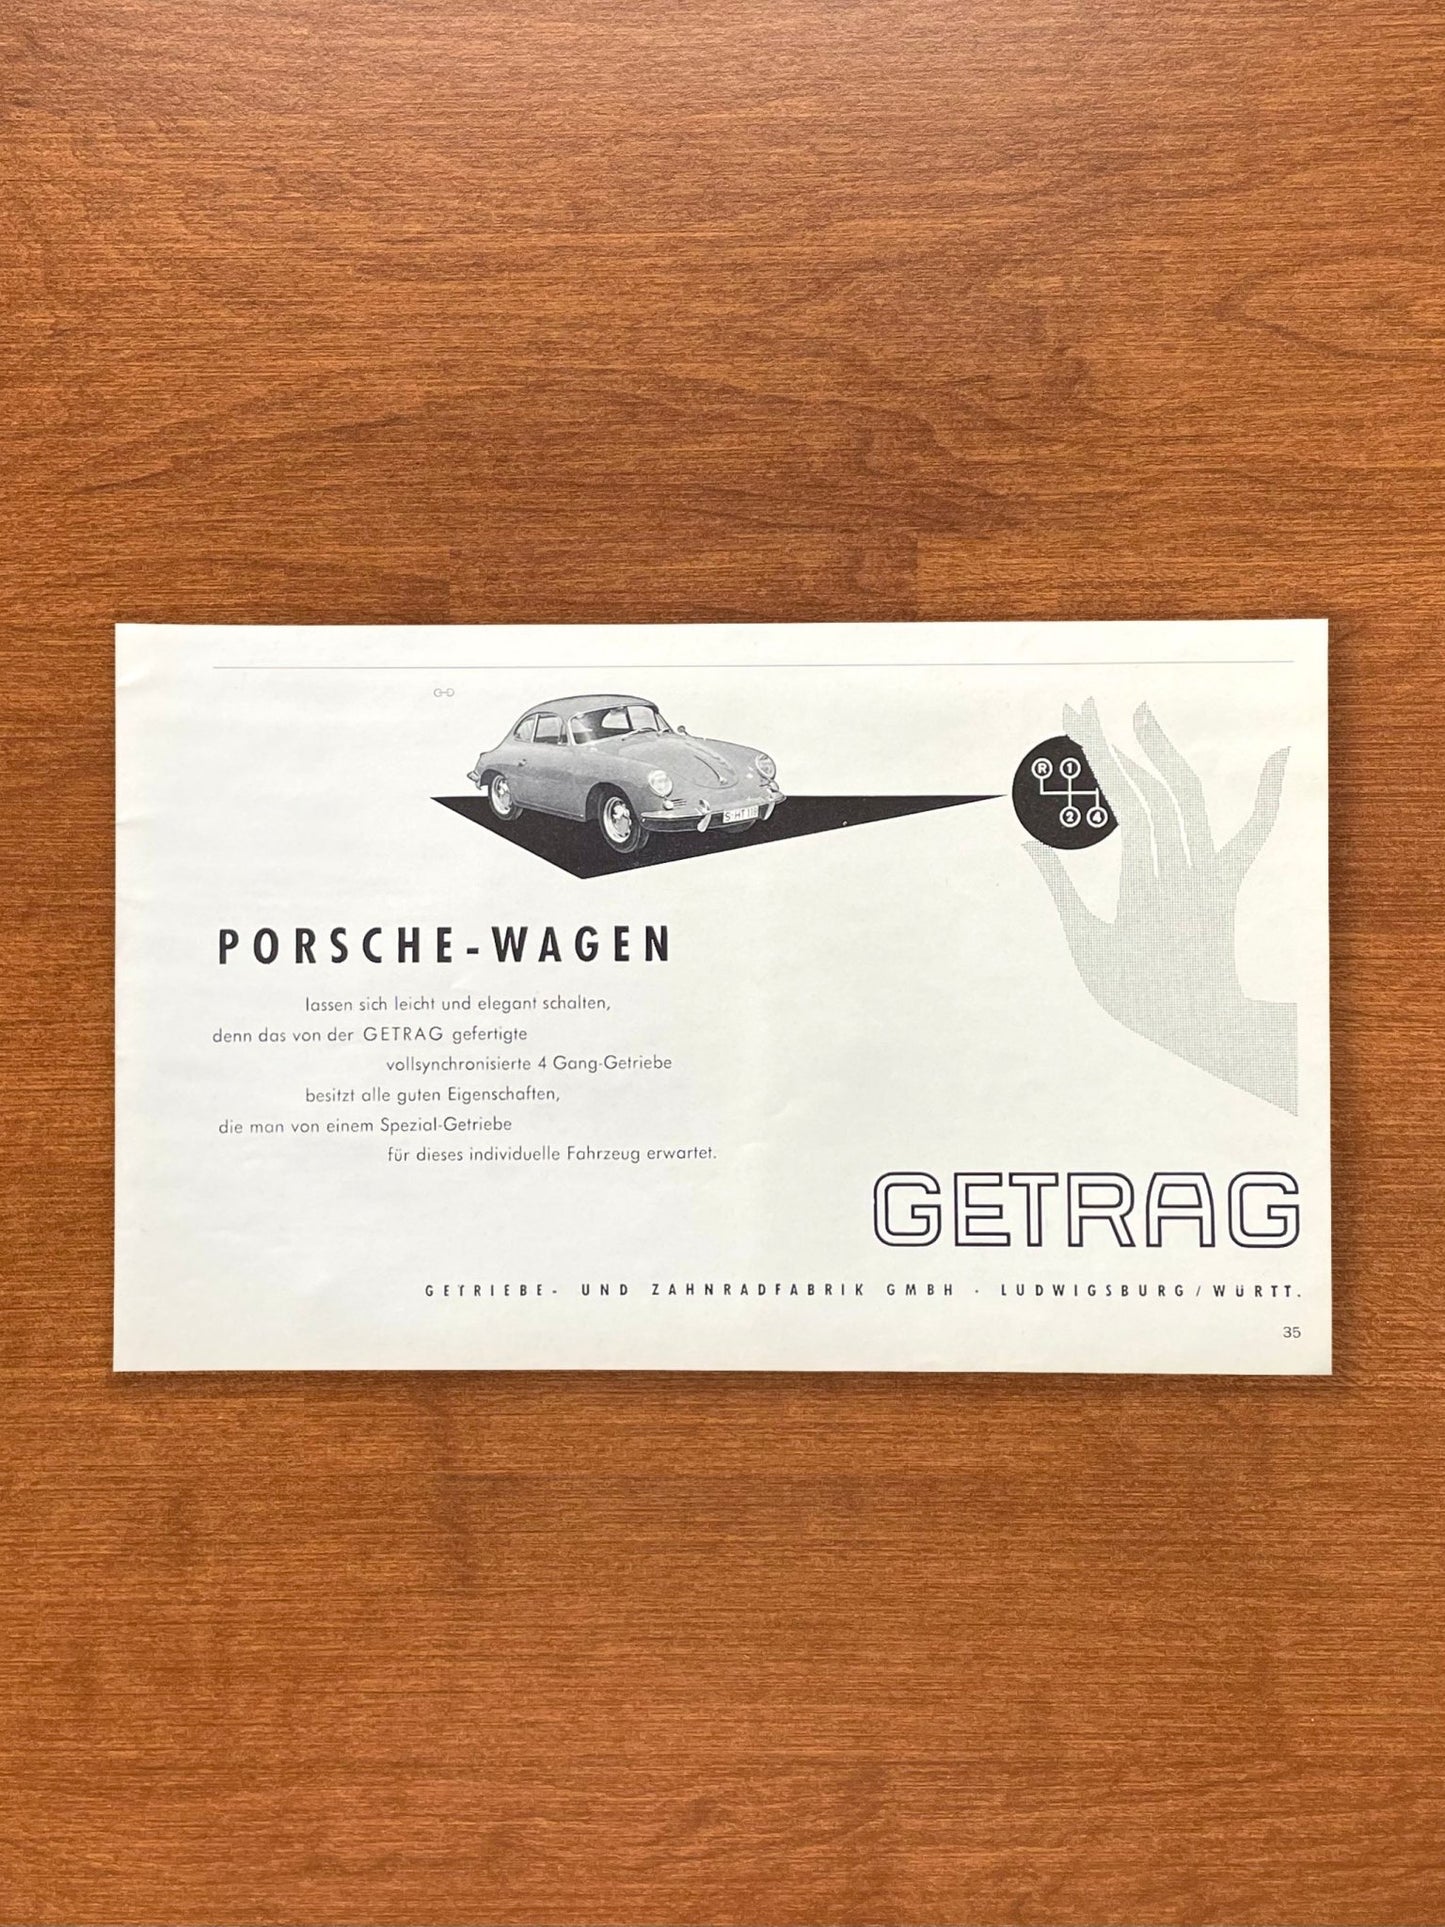 1965 Porsche advertisement in German